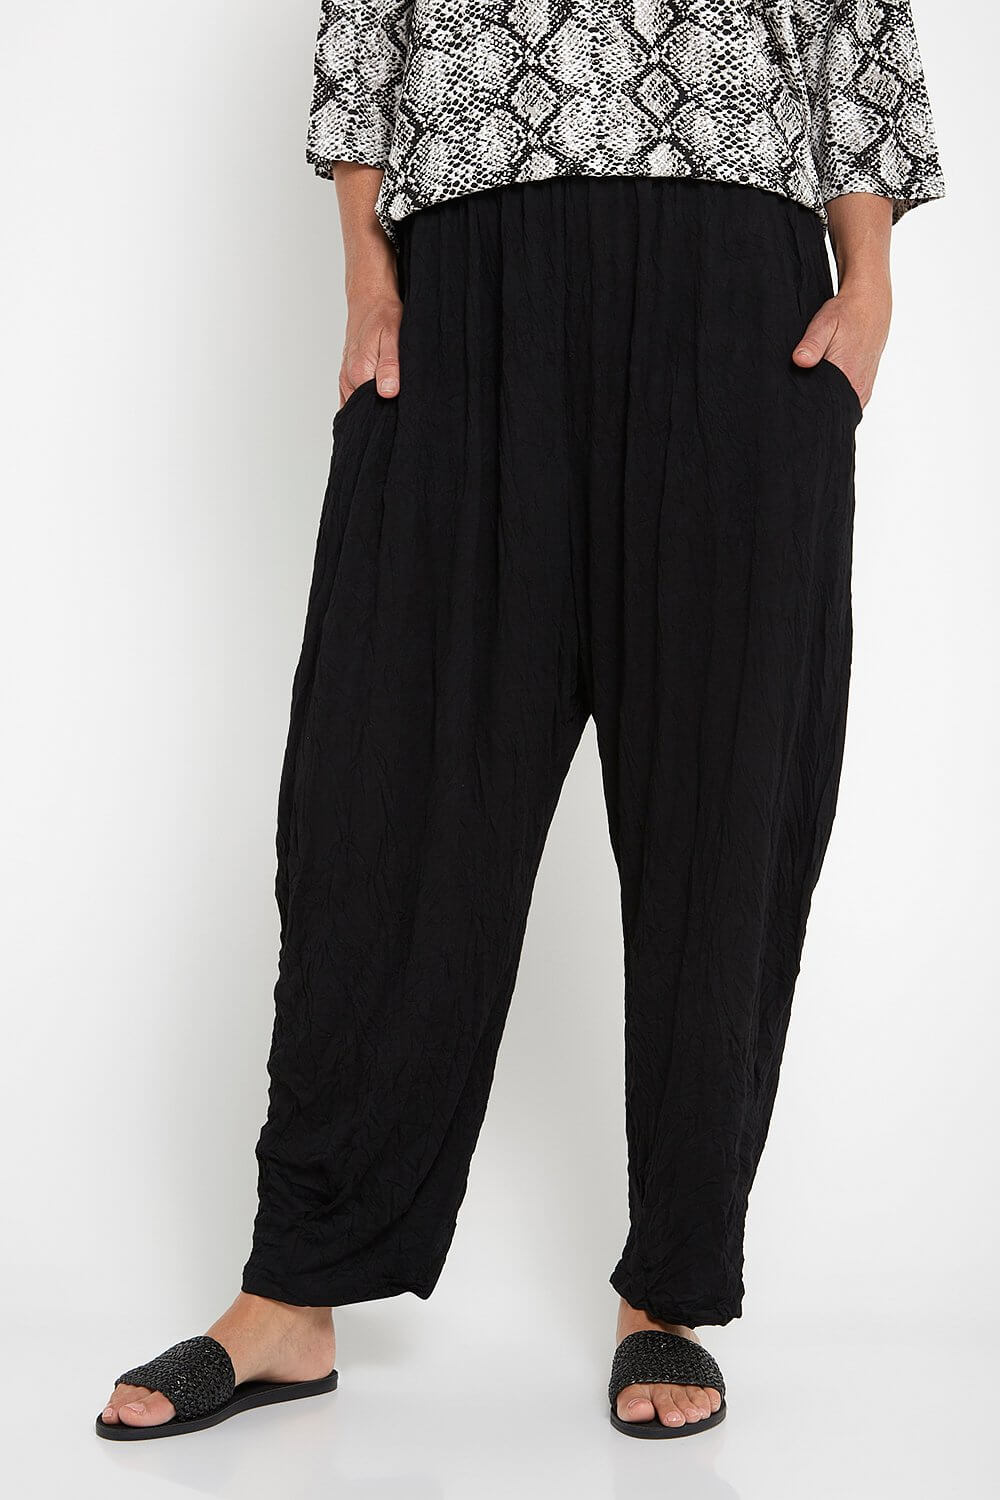 TULIO Fashion | Alisha Pant - Black | 100% Cotton – Tulio